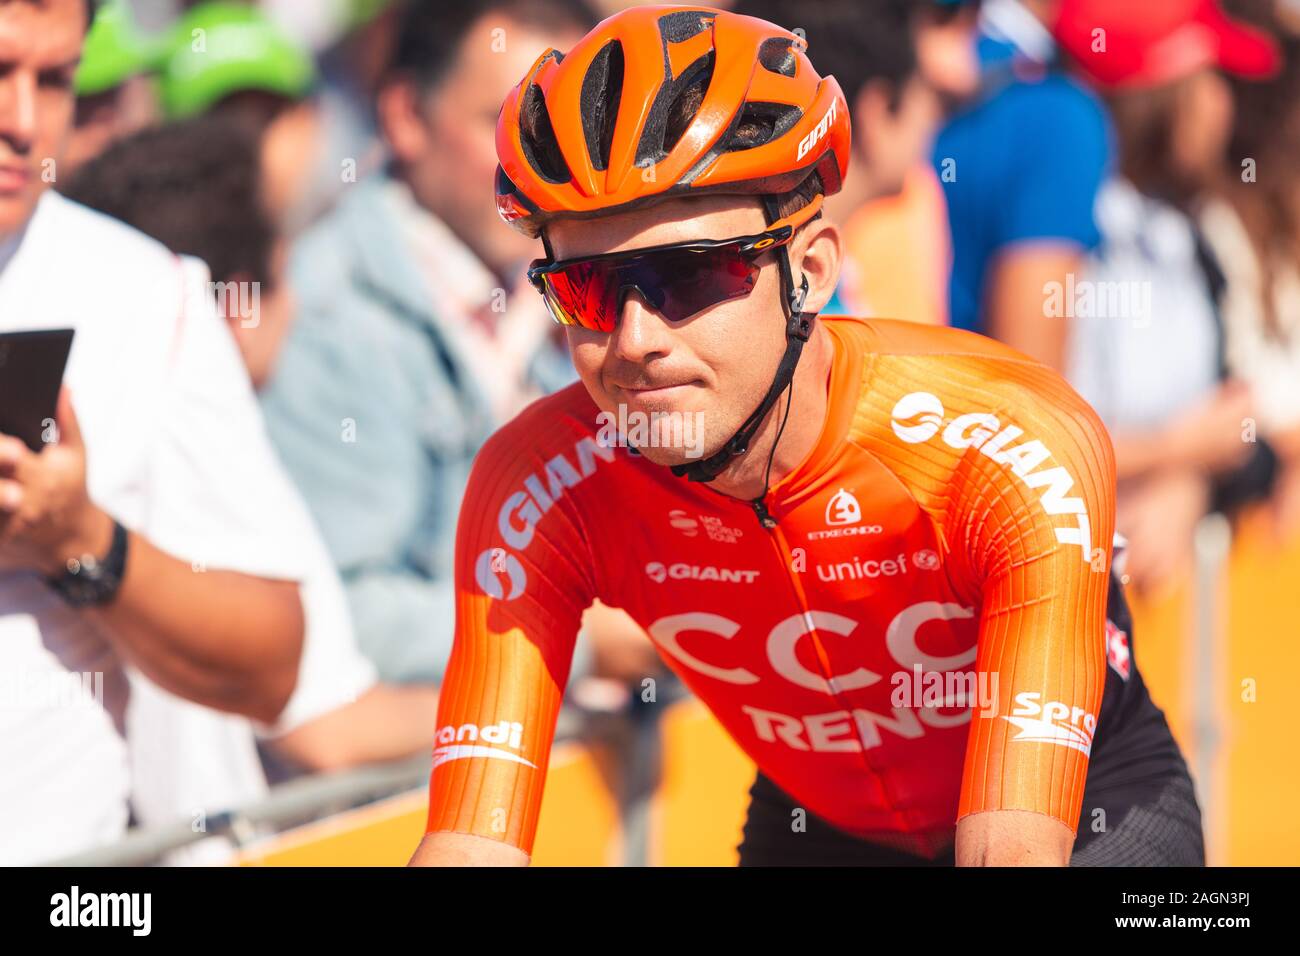 San Vicente de la Barquera, Spain-September 7, 2019: Szymon SAJNOK, cyclist of the CCC Team during stage 14 of La Vuelta a España. Stock Photo